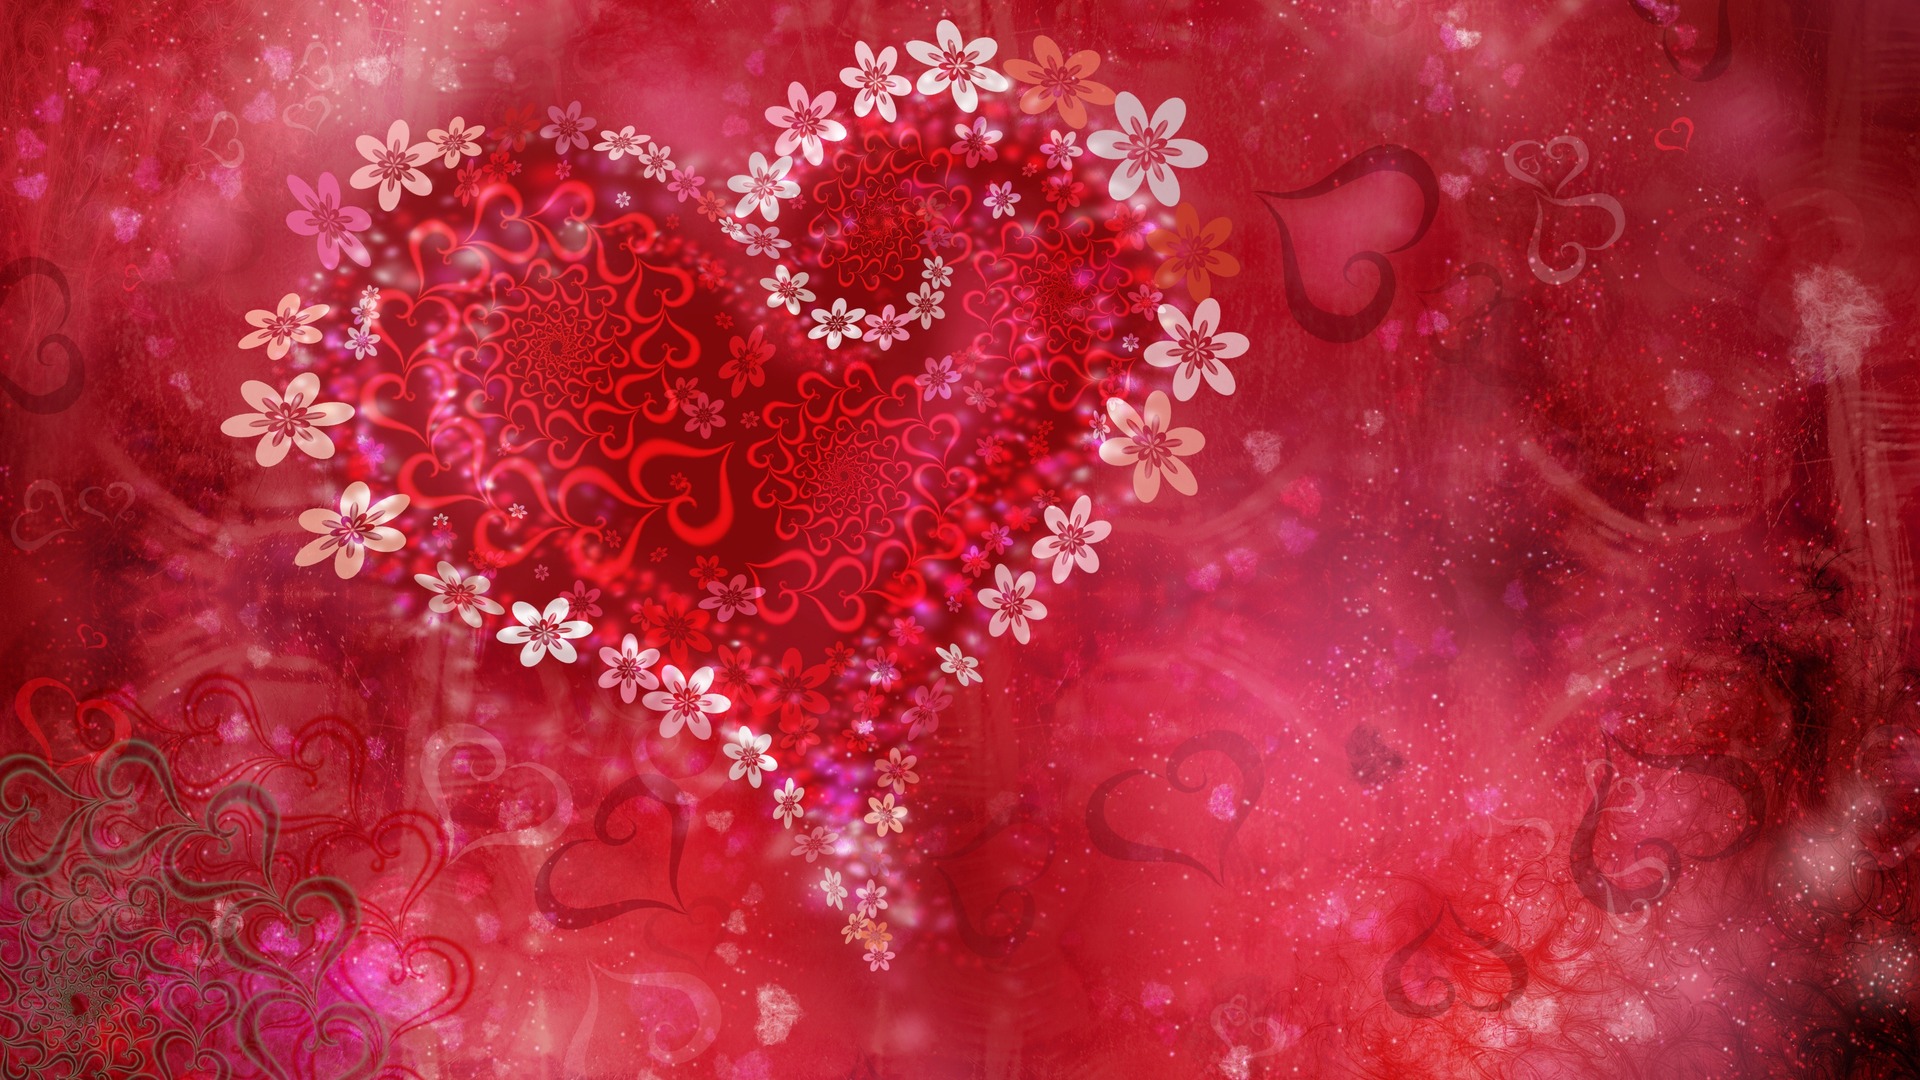 Love Heart Flowers HD Wallpaper Love Valentine Wallpapers